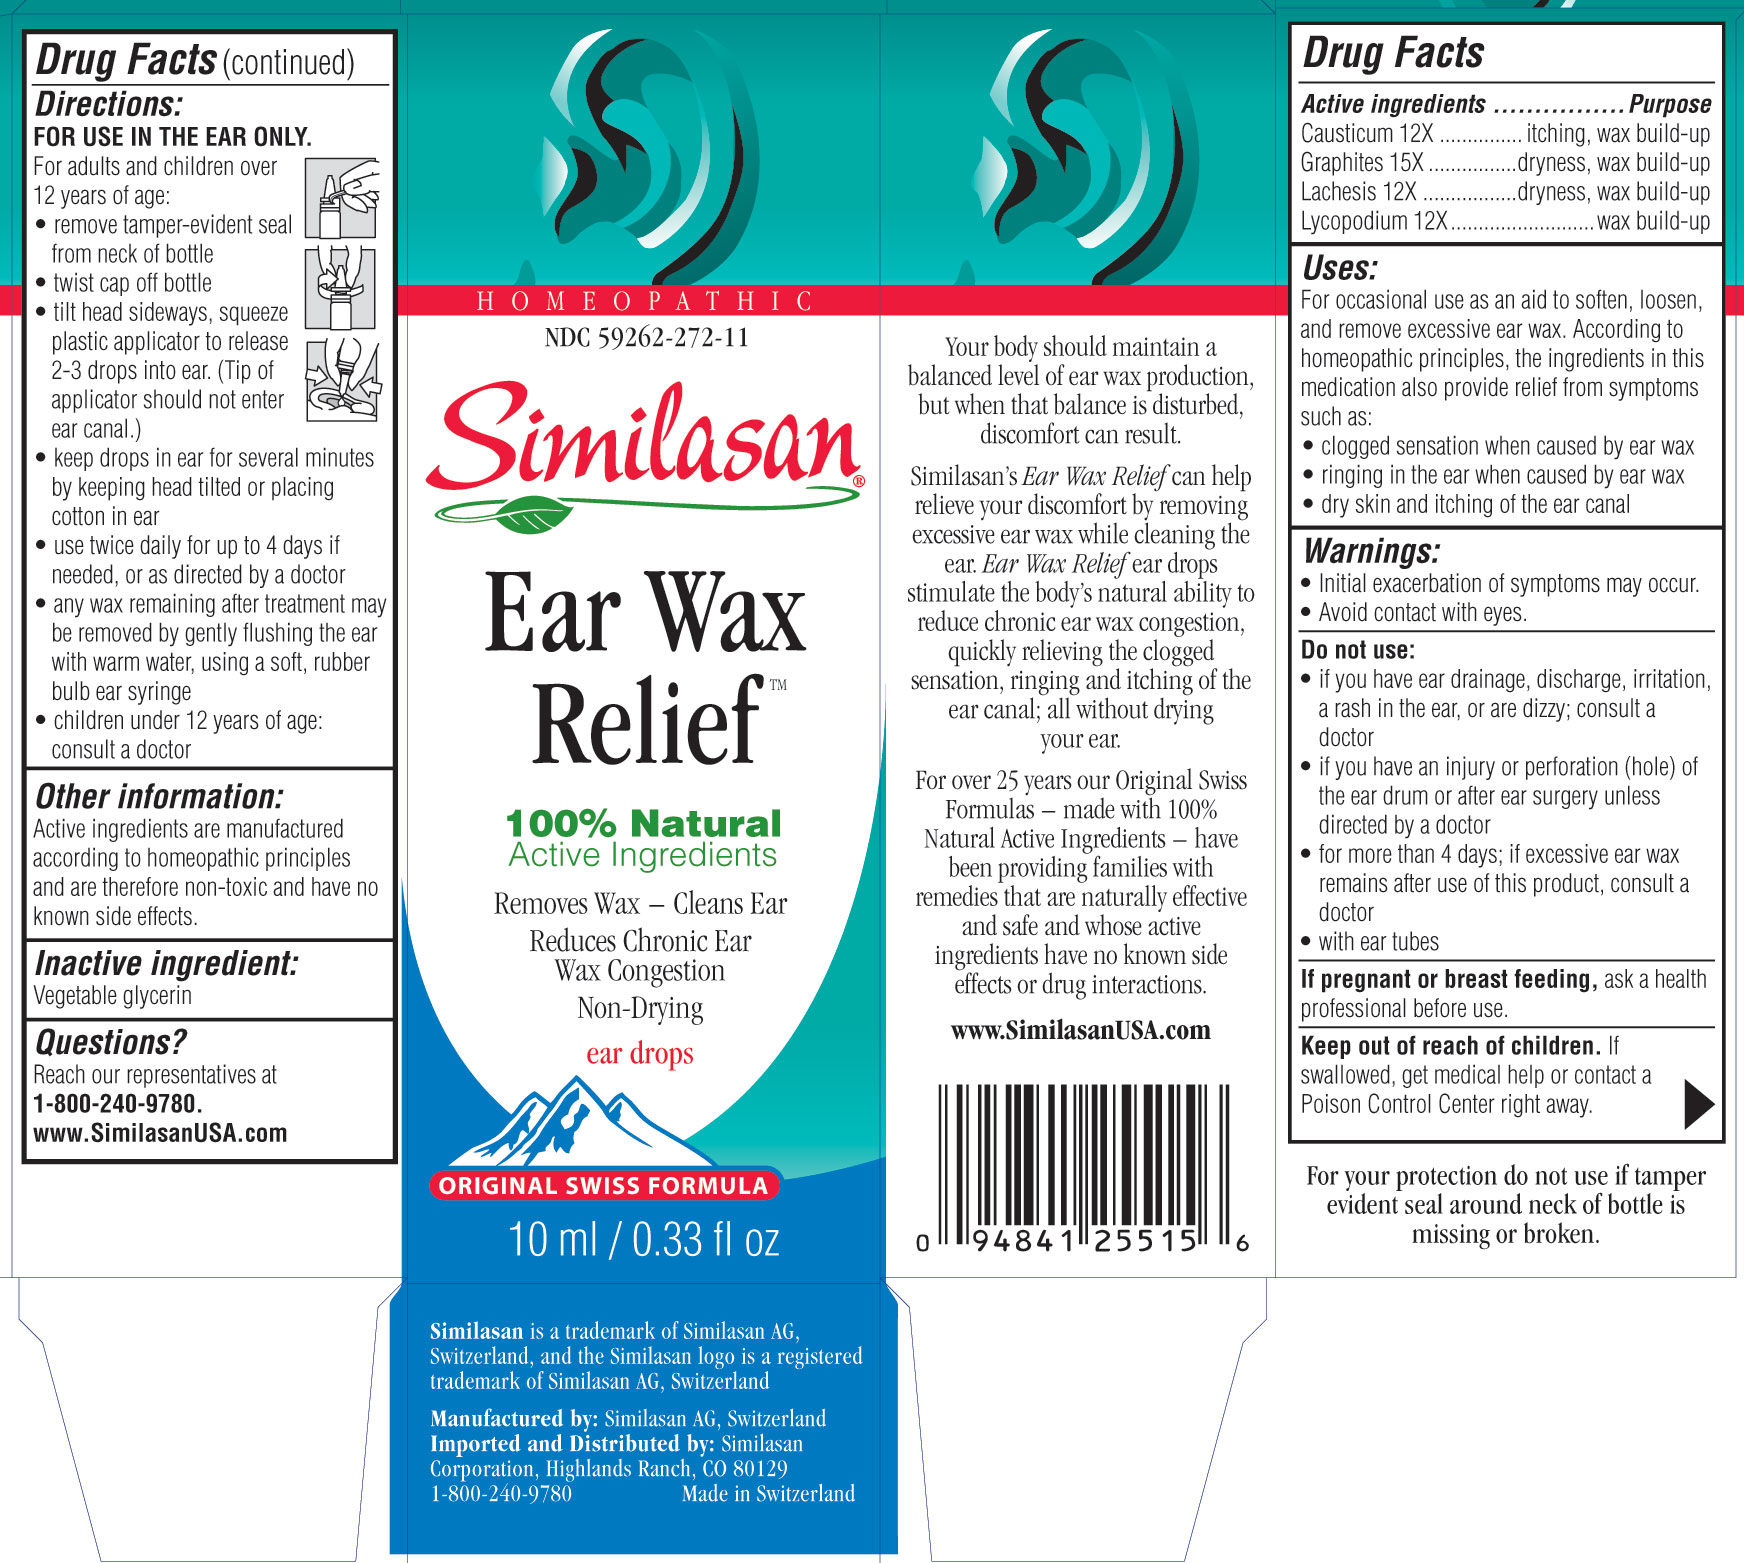 Ear Wax Relief box